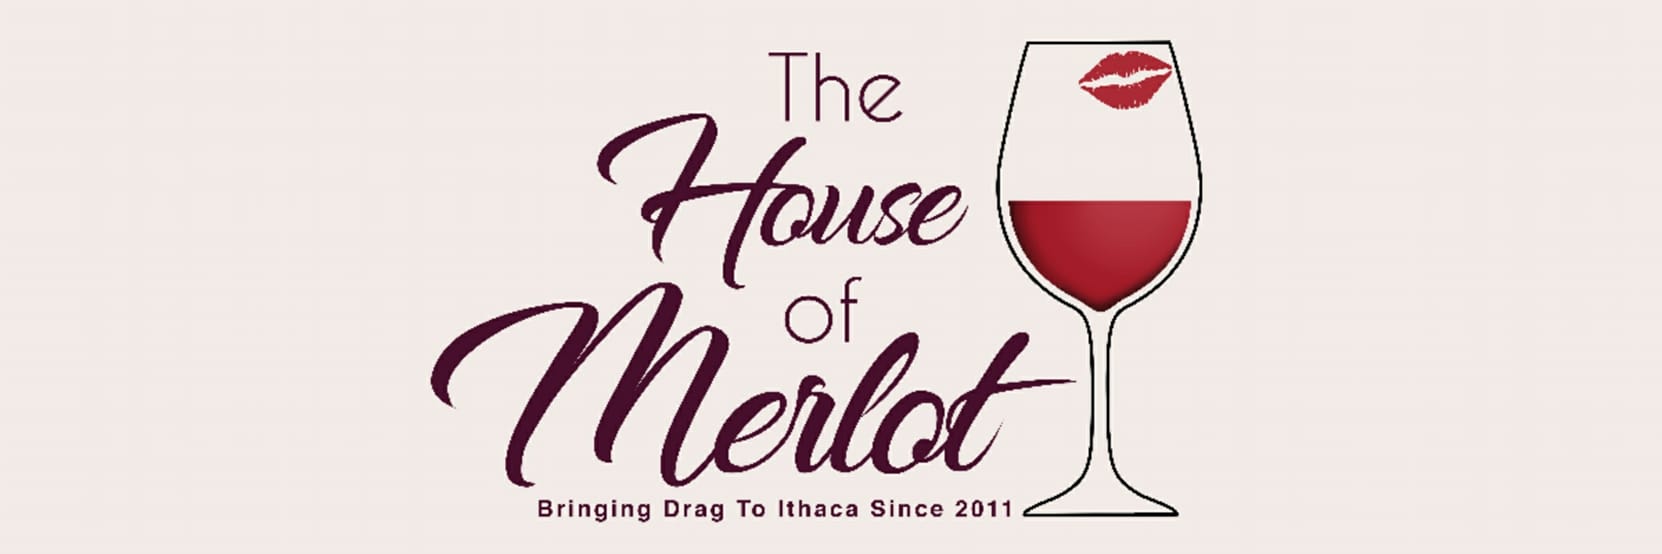 house of merlot drag homeless fundraiser holiday lgbt ithaca the range gay lesbian bar